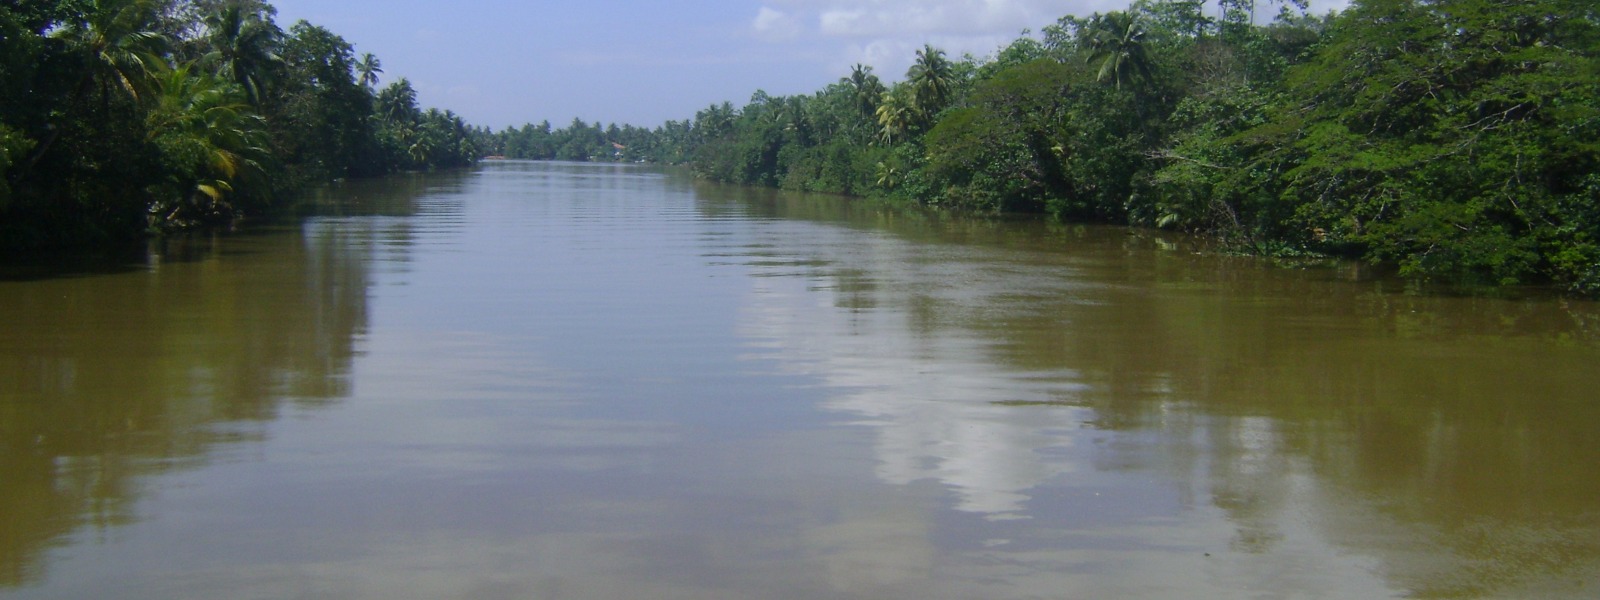 Water level of Mahaweli river reaches minor flood level